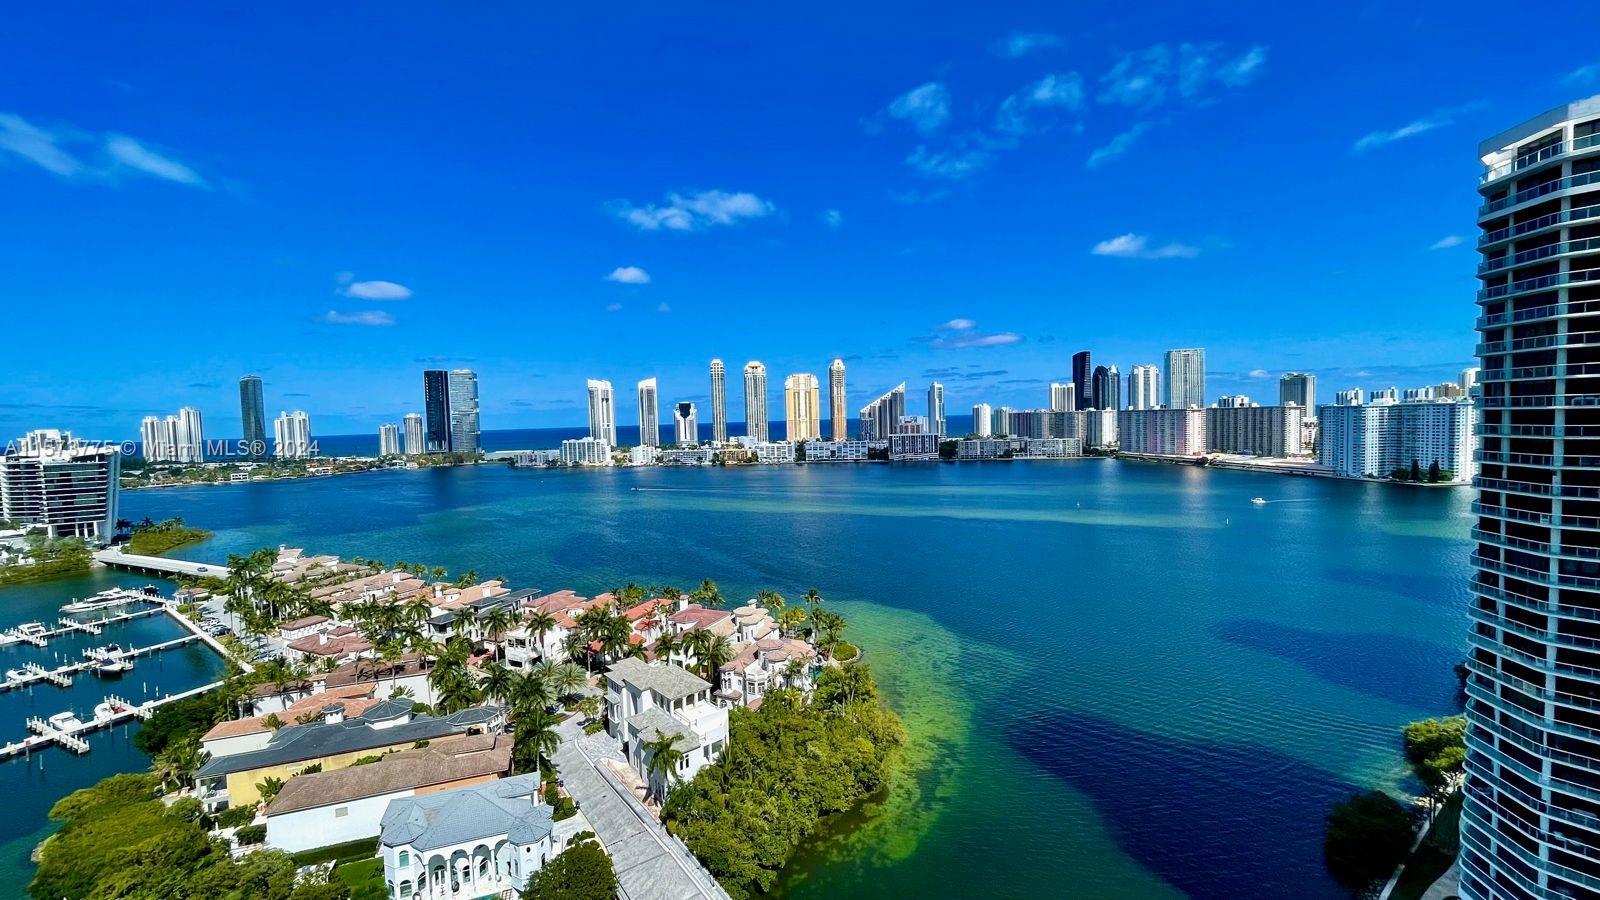 Property for Sale at 6000 Island Blvd Blvd 2307, Aventura, Miami-Dade County, Florida - Bedrooms: 3 
Bathrooms: 4  - $2,790,000